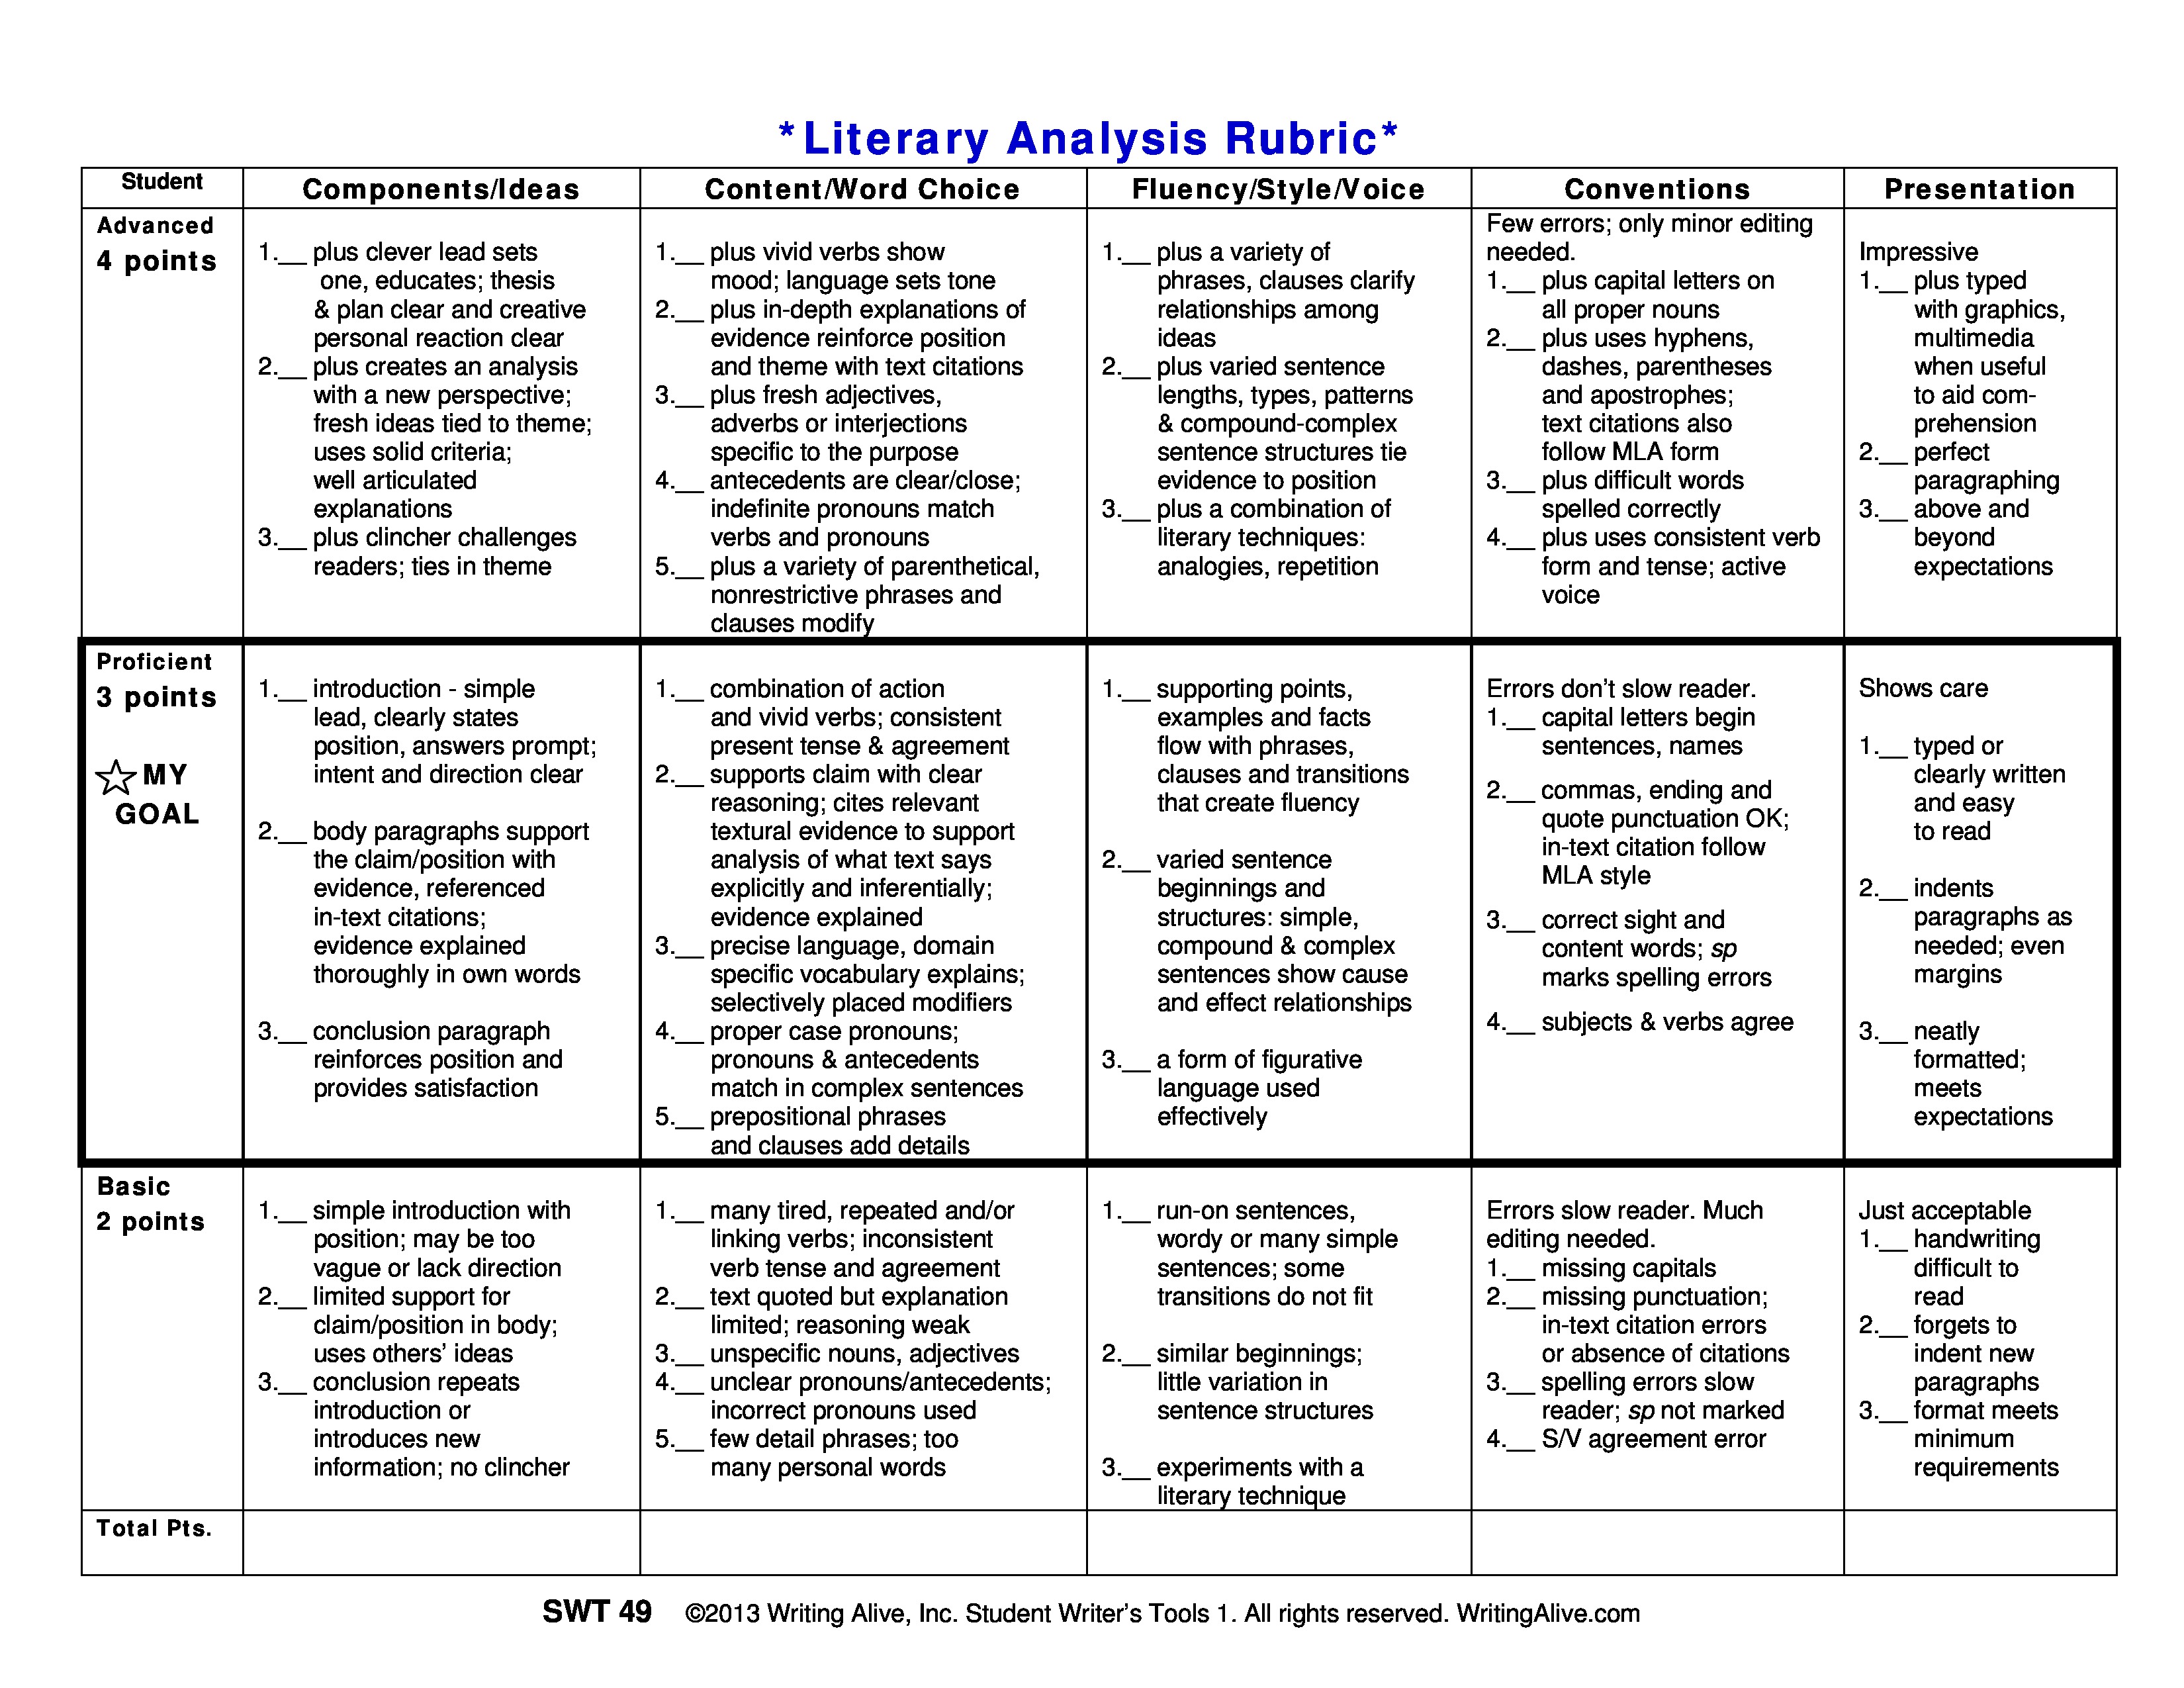 Literary analysis format